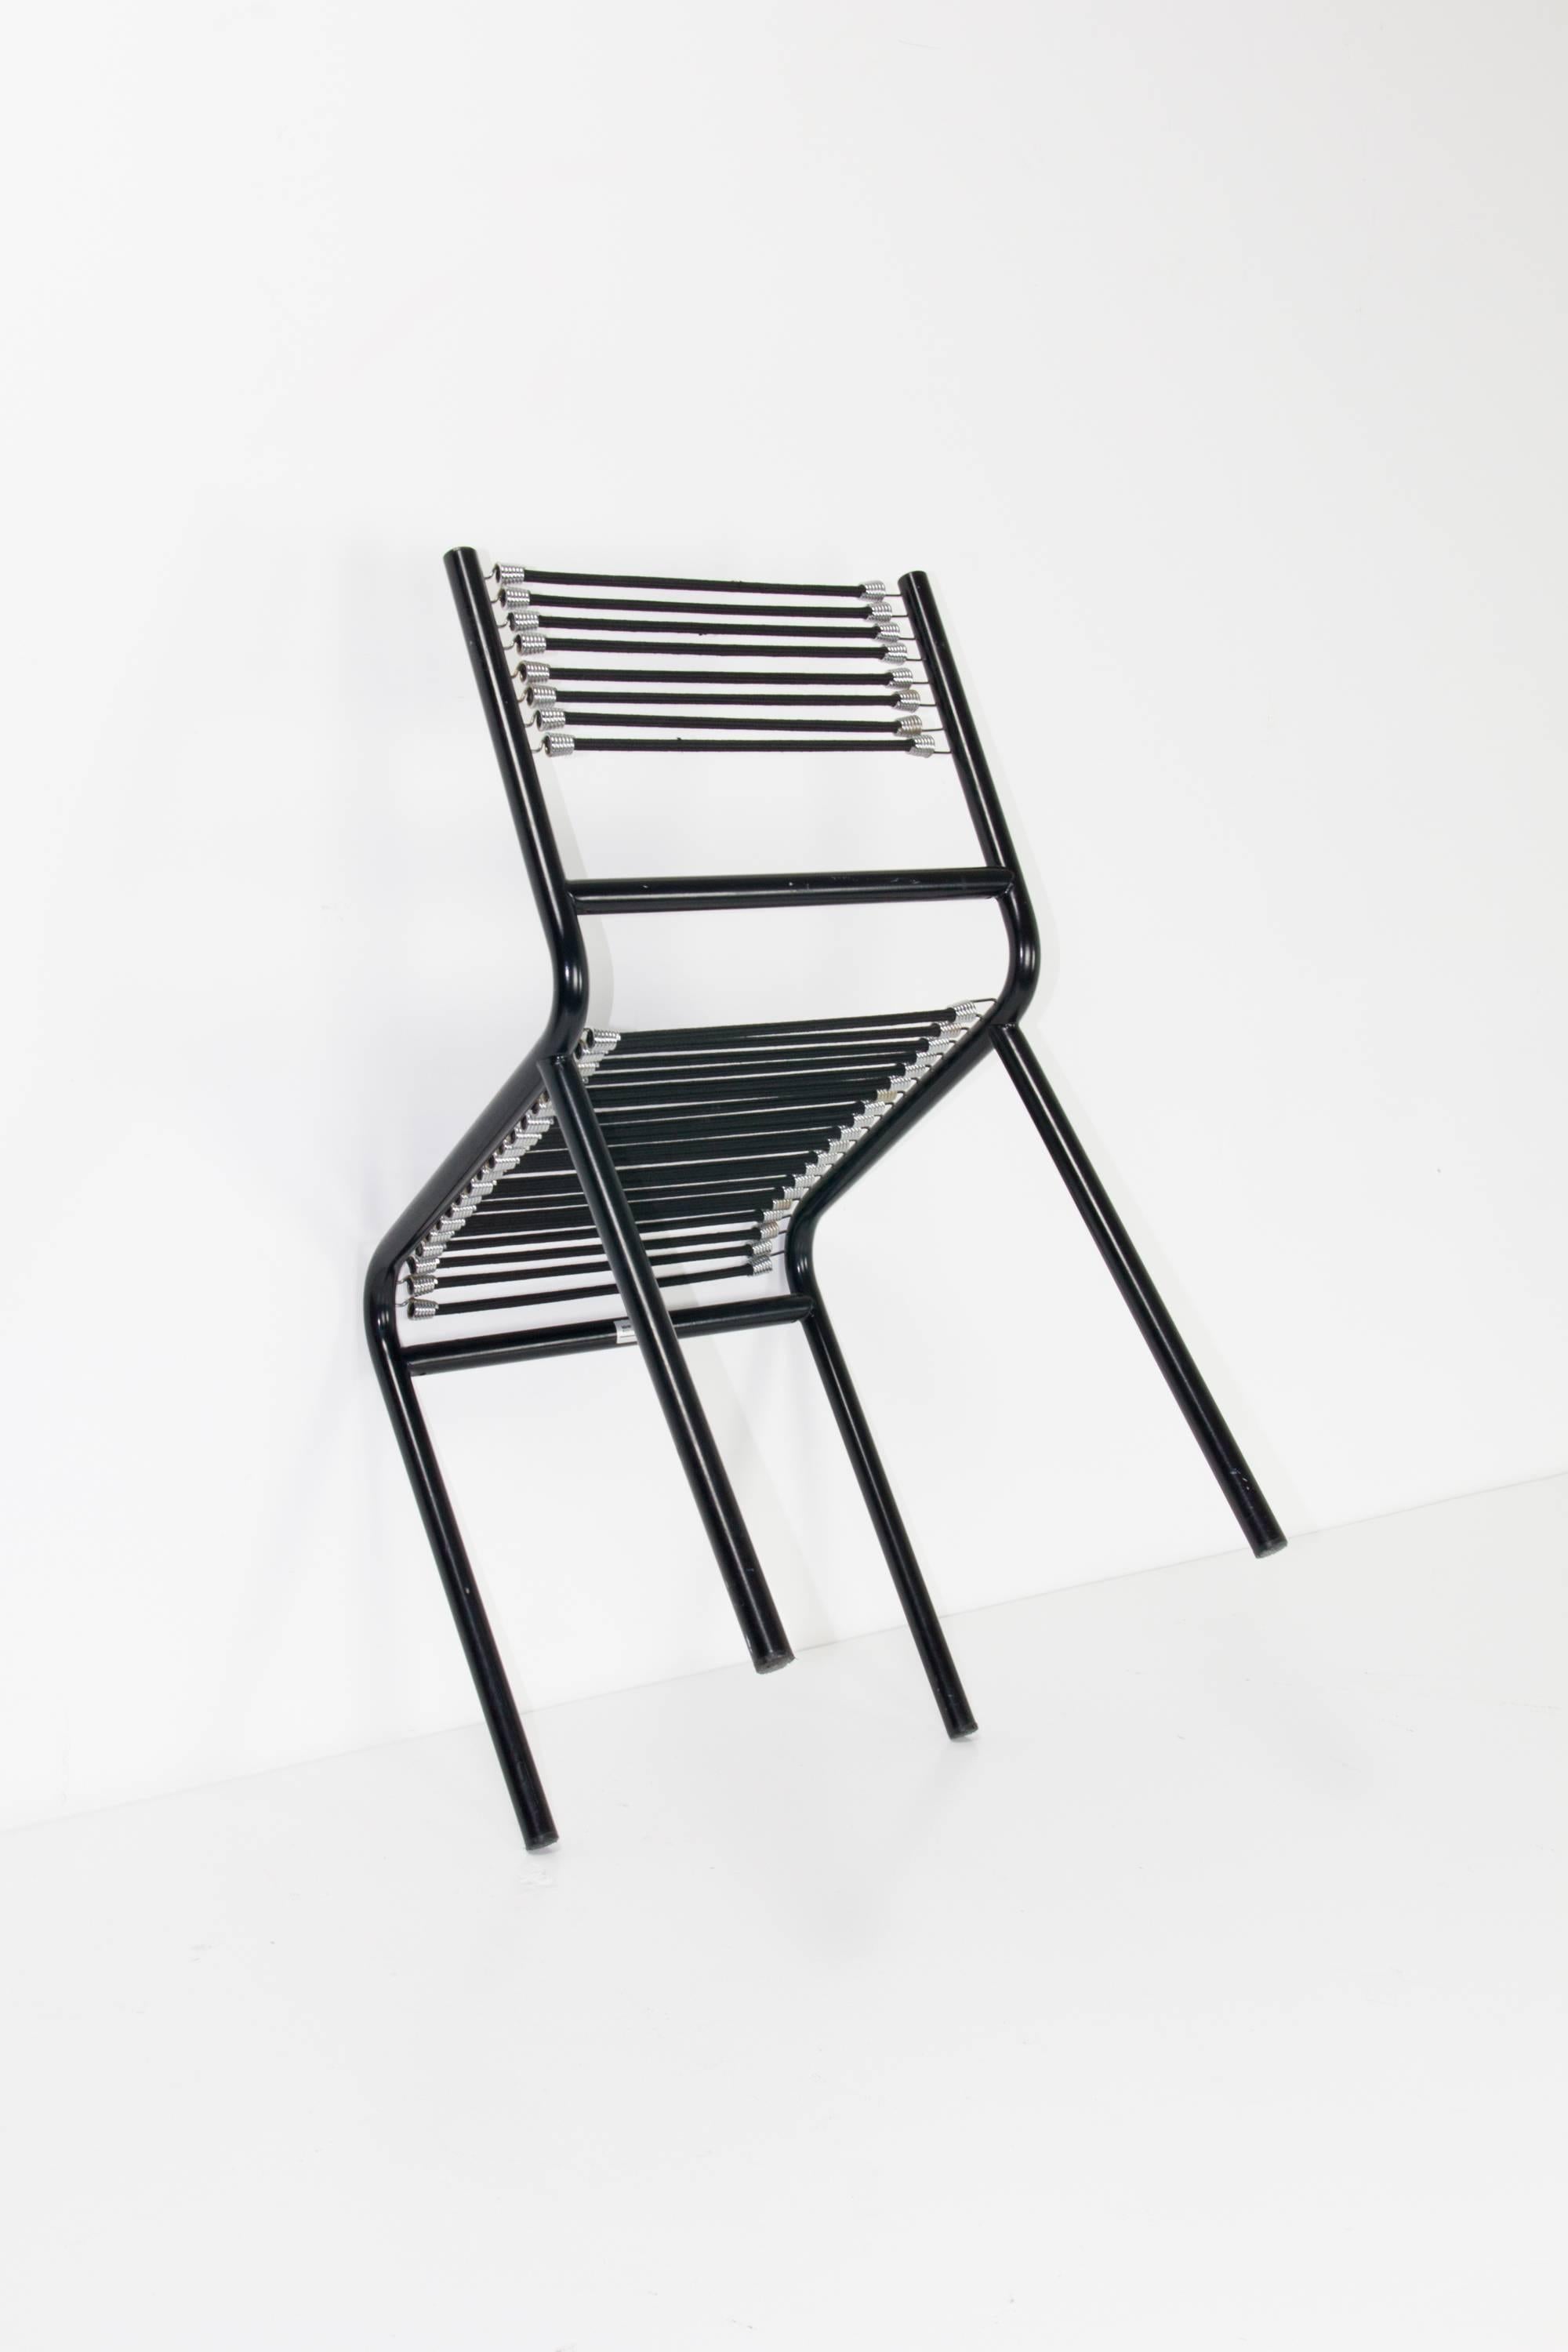 American Pair of René Herbst Sandows Chairs